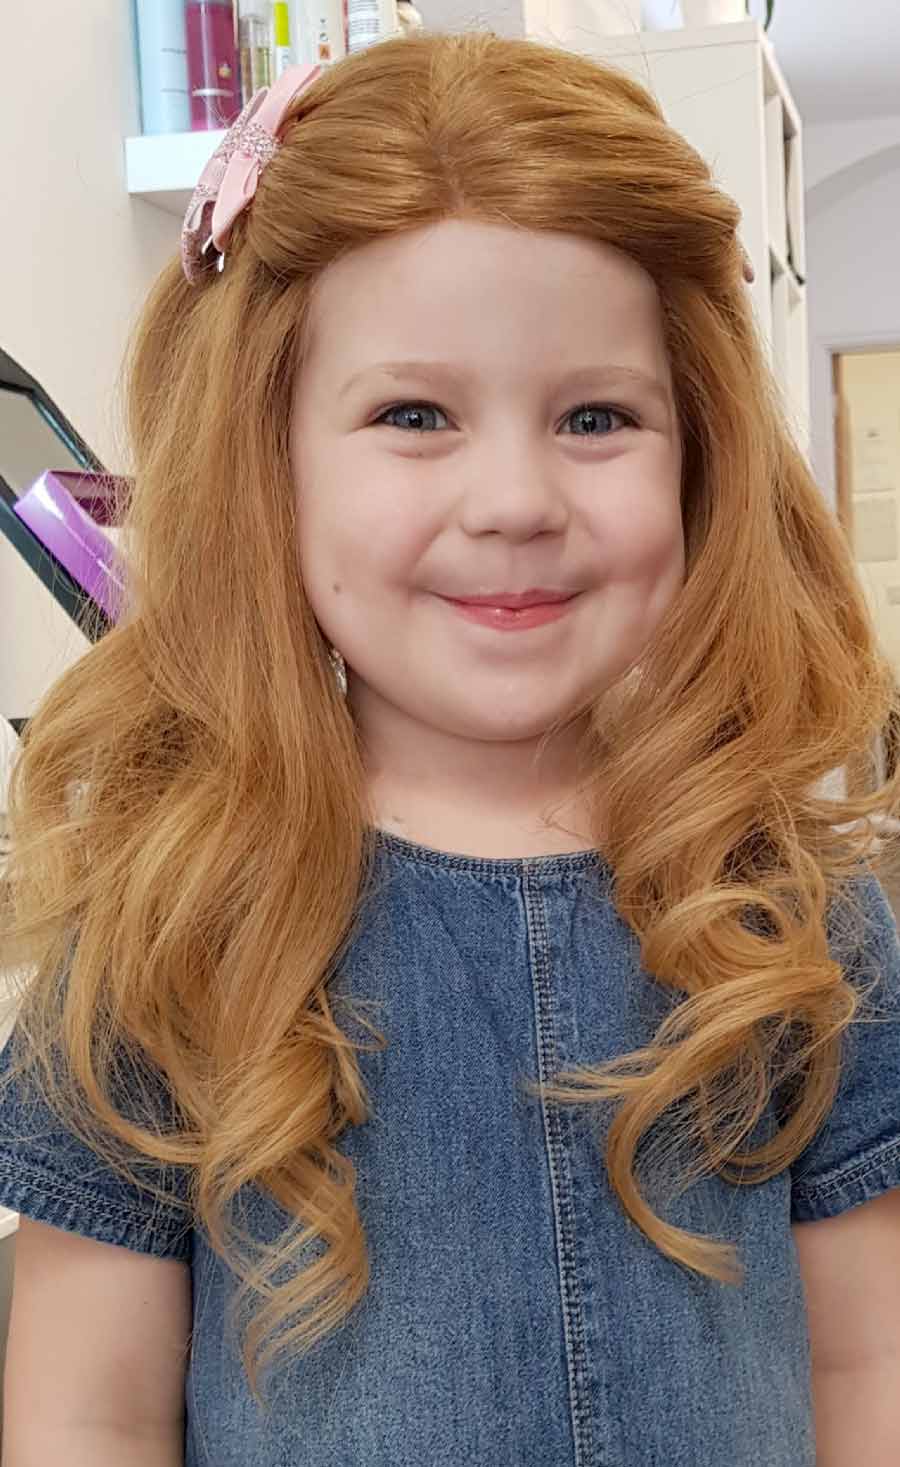 Flo in her Little Princess Trust wig